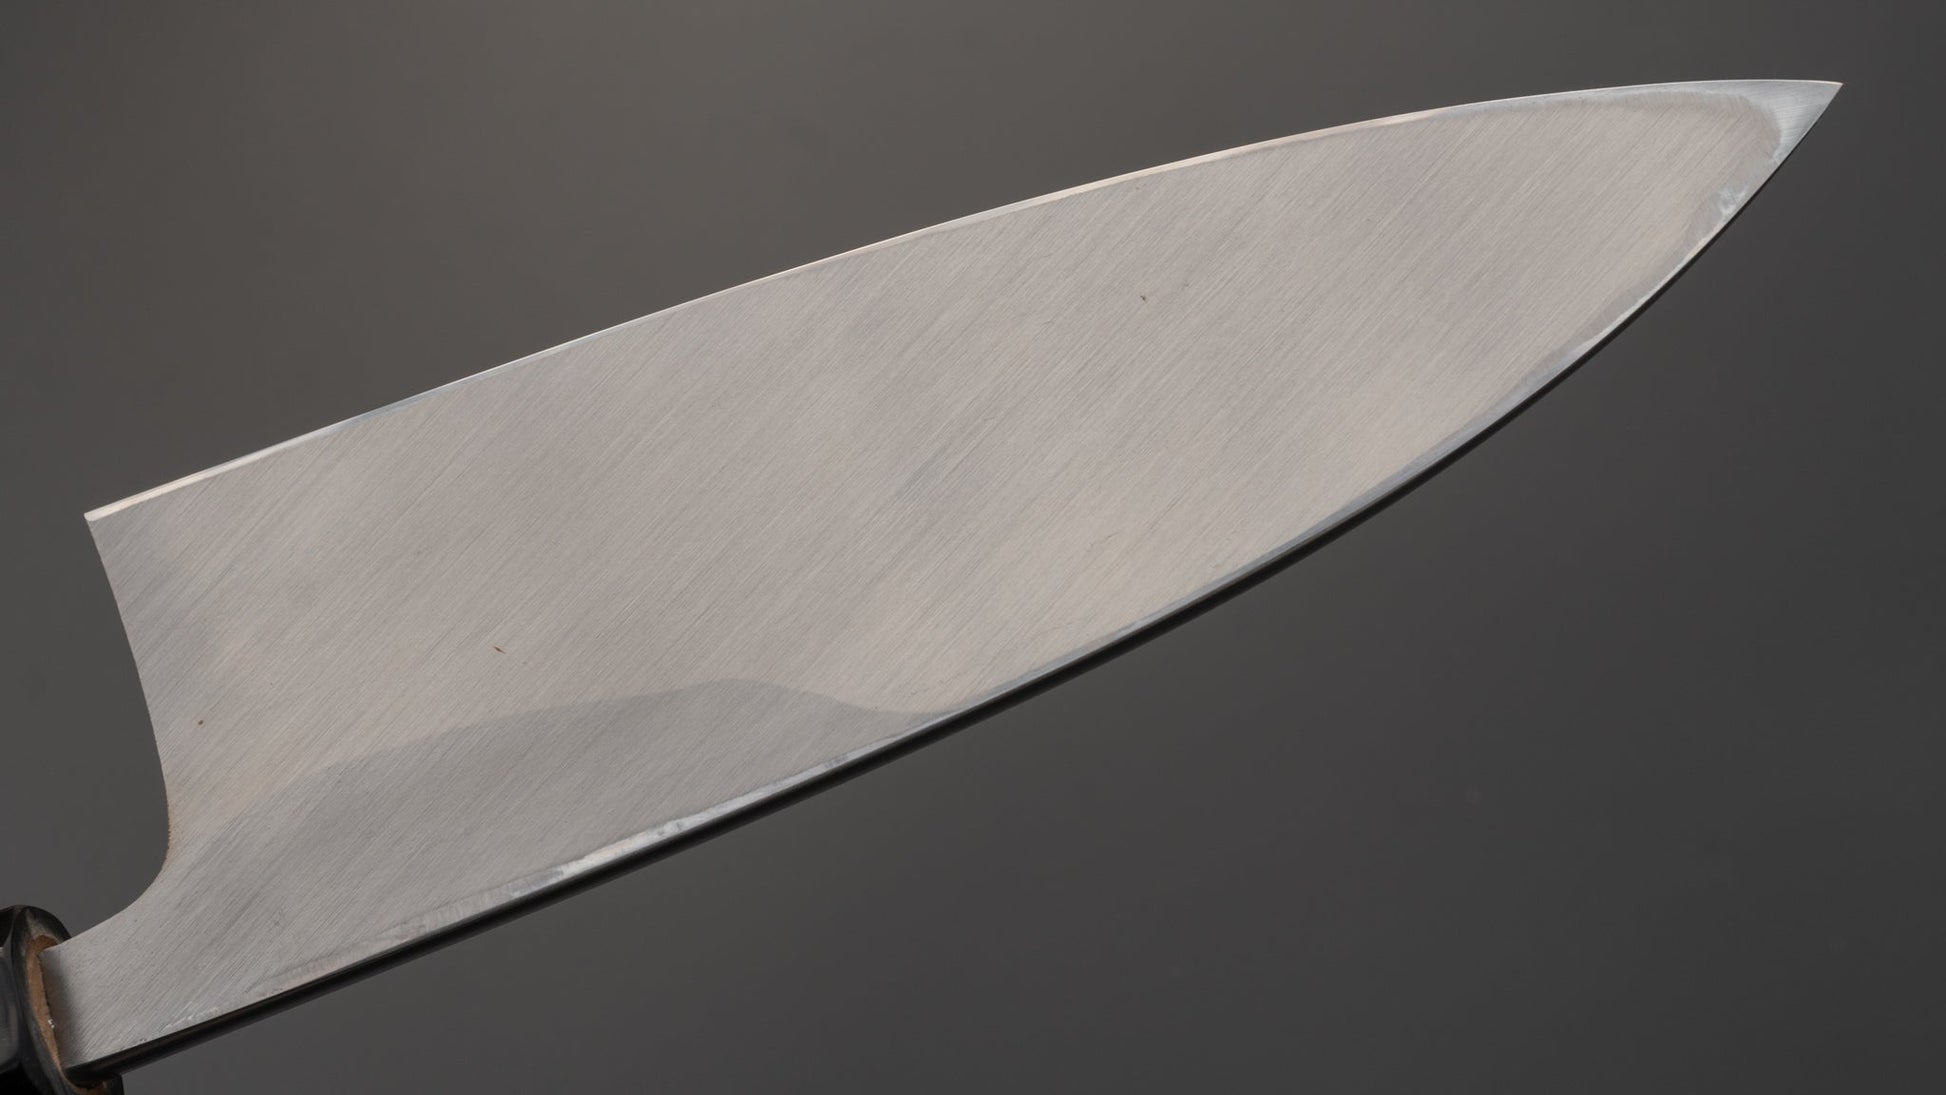 Kogetsu NOS White Steel Deba 165mm Ho Wood Handle | HITOHIRA